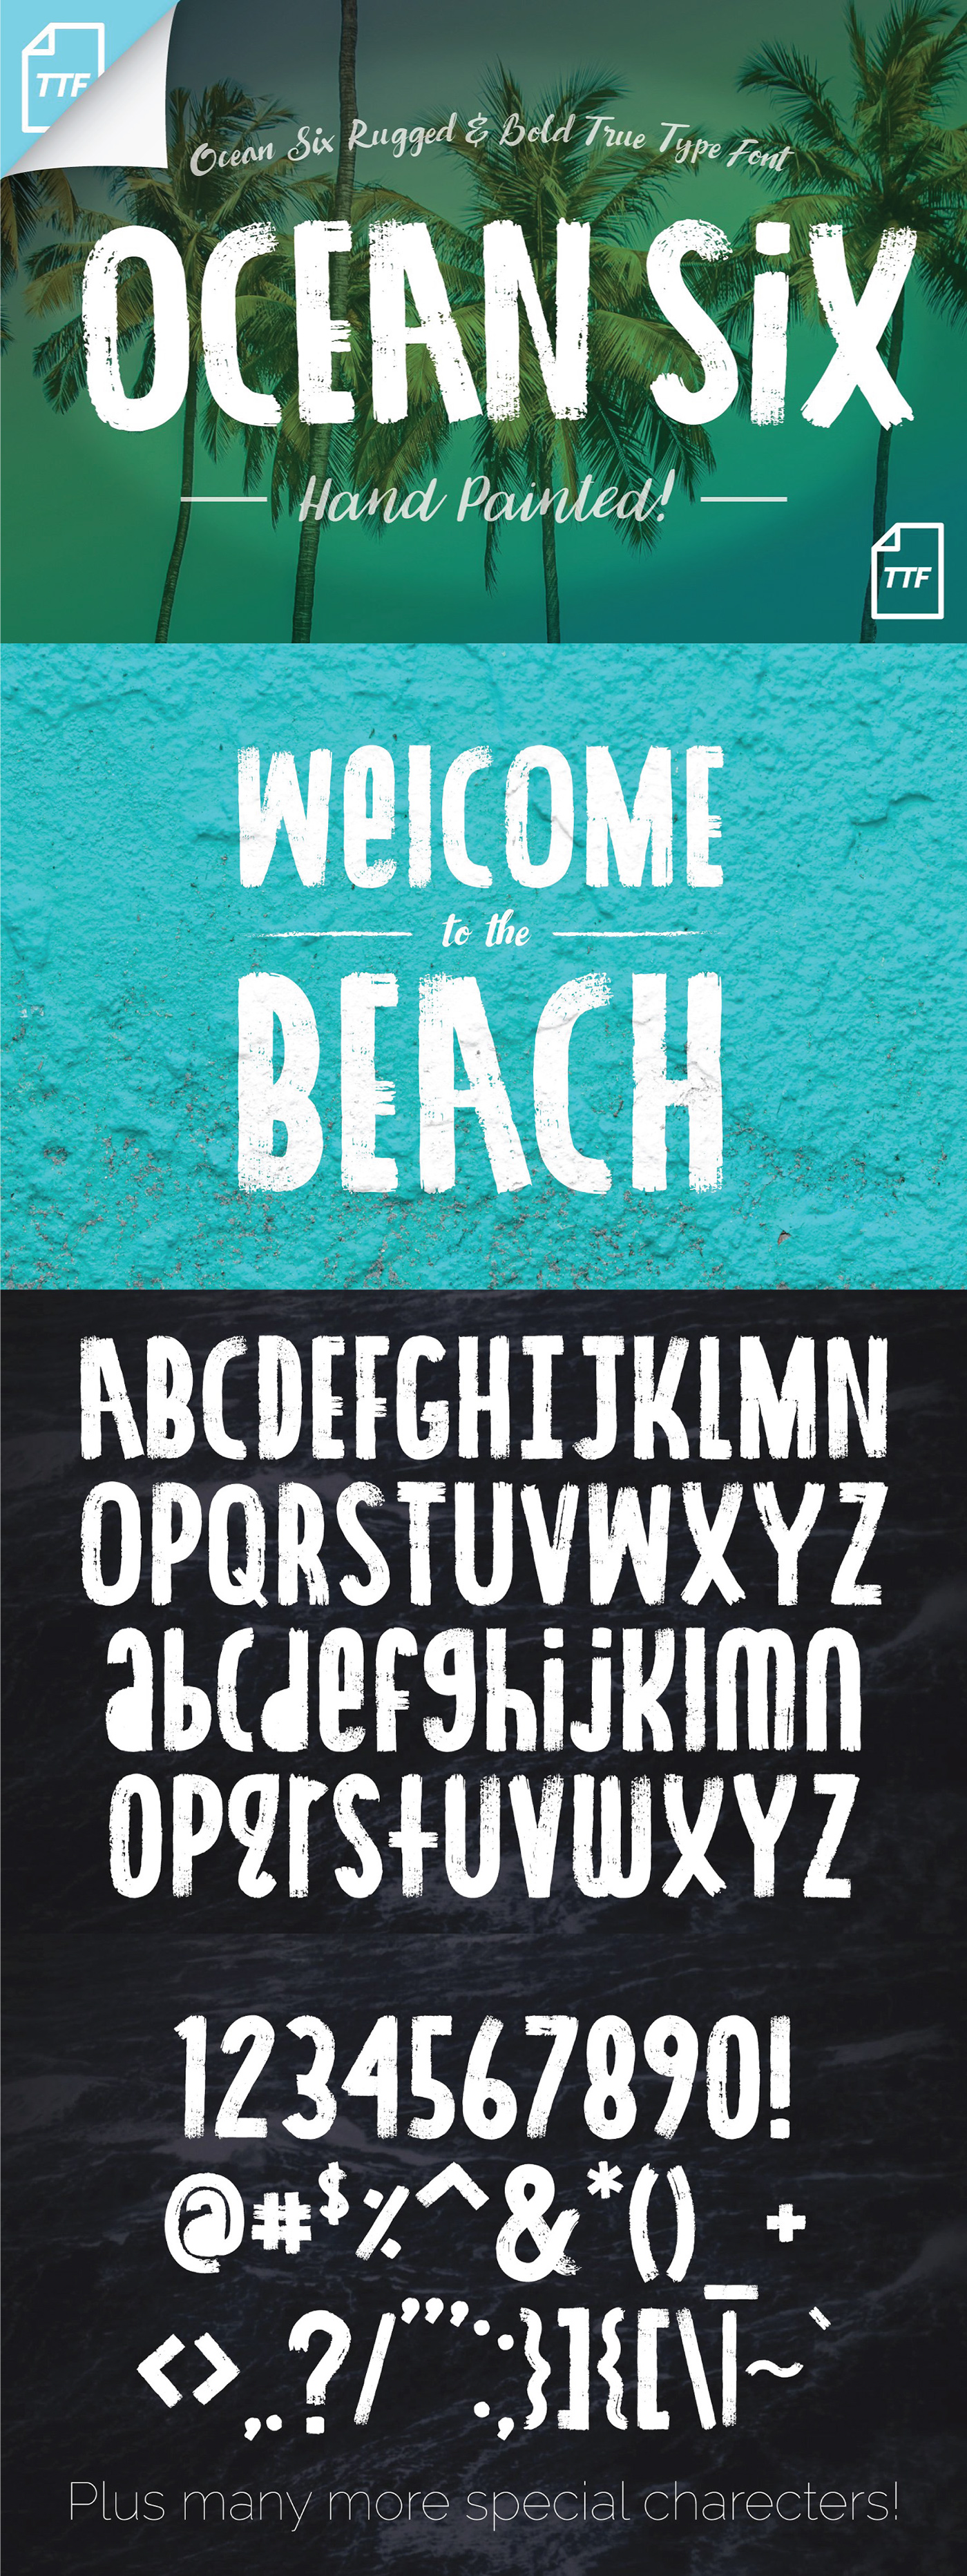 Free font free fonts free freebie free typeface brush Brush font freebies hand drawn display font